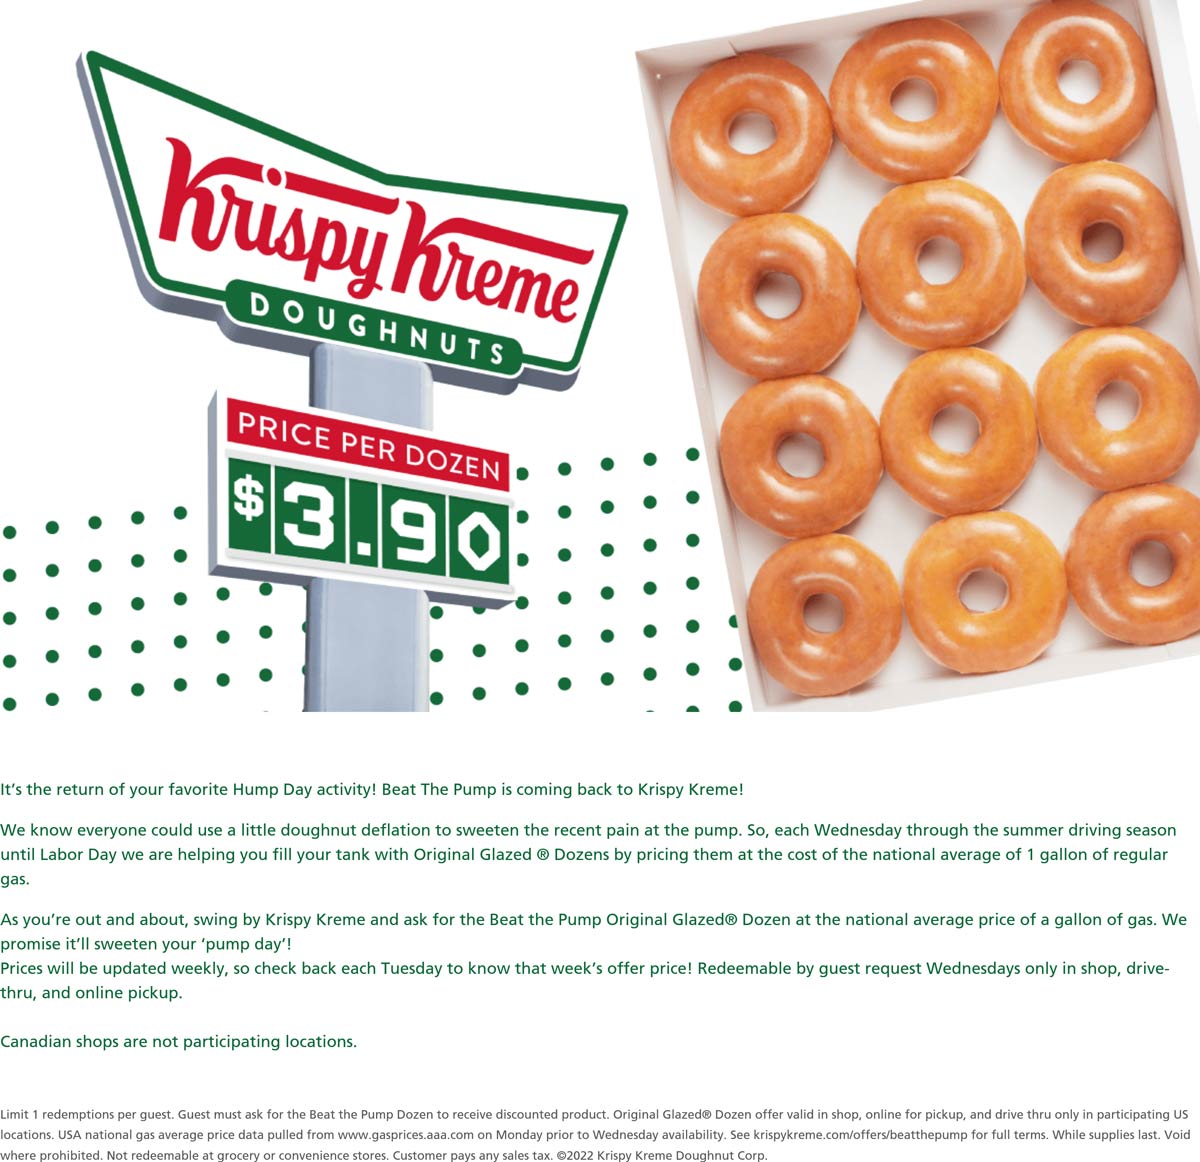 Krispy Kreme restaurants Coupon  $3.90 dozen doughnuts today at Krispy Kreme #krispykreme 